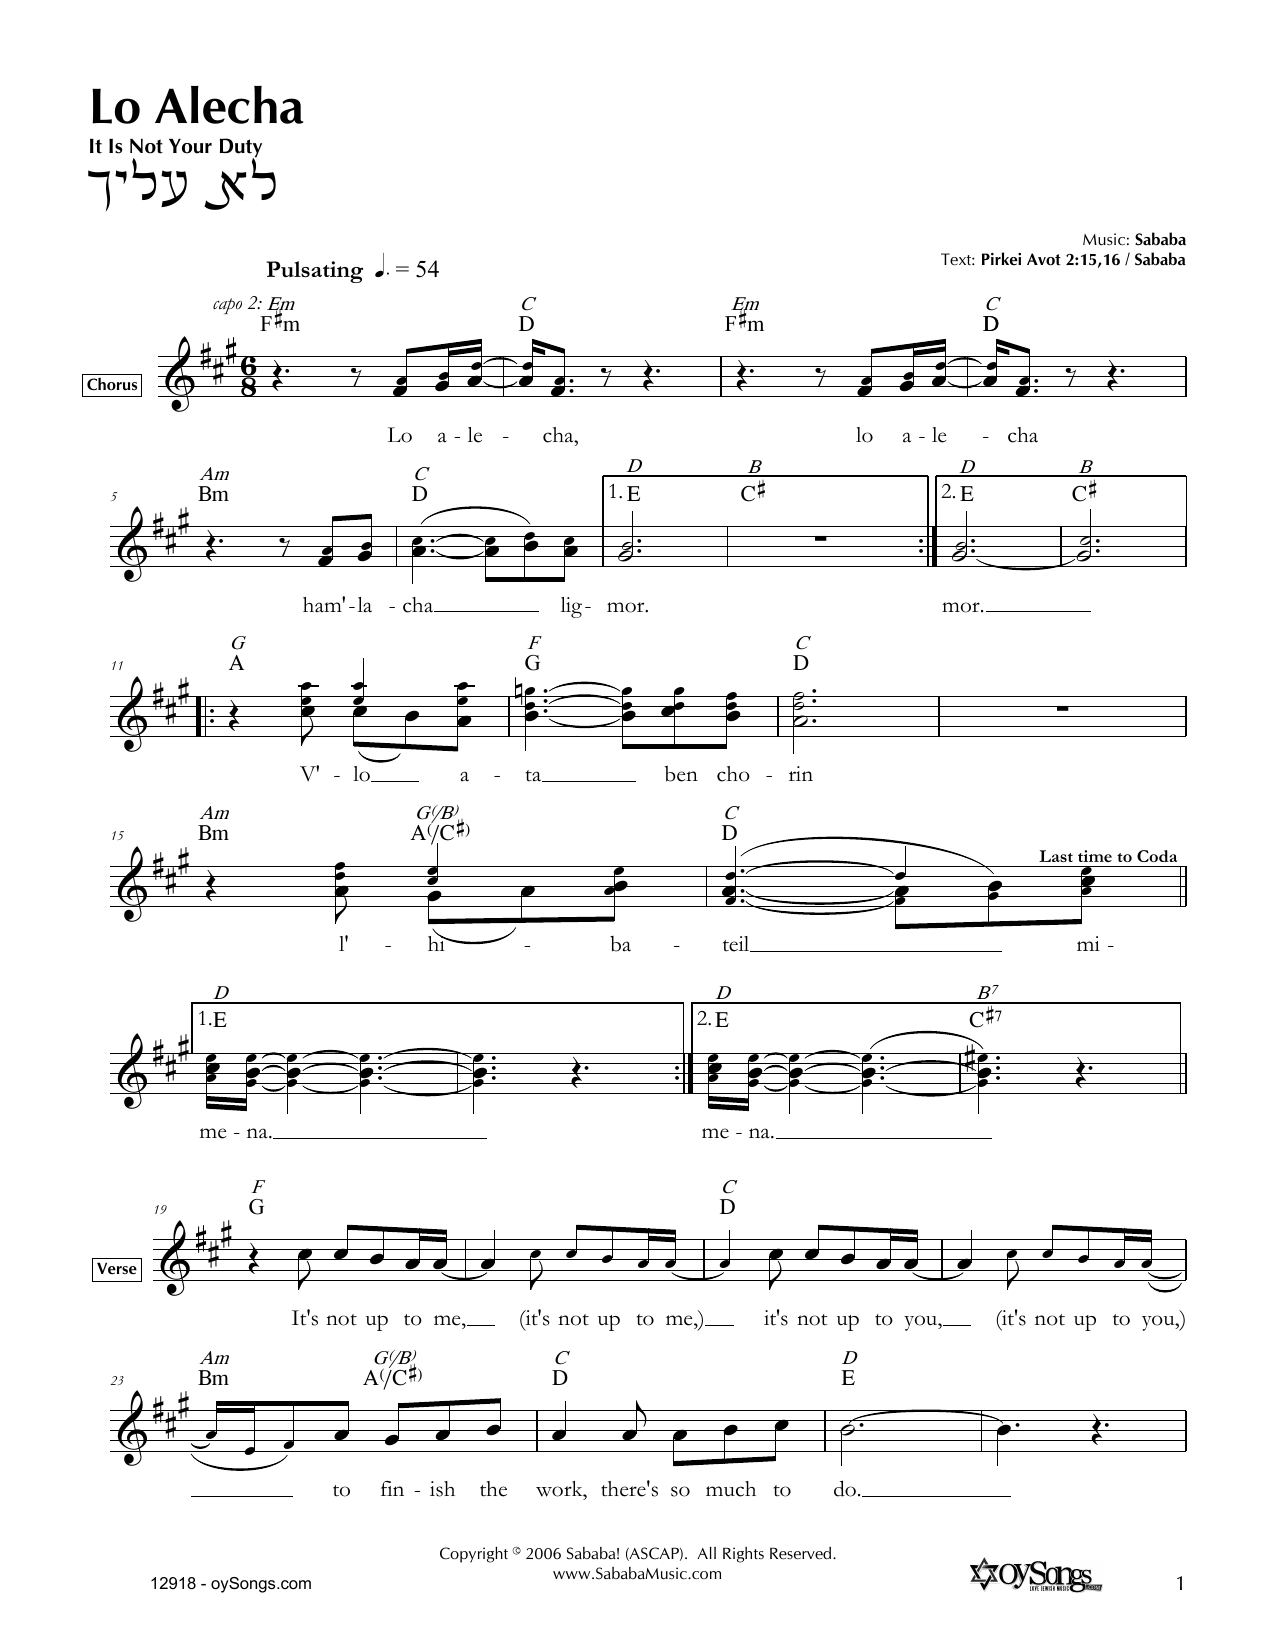 Sababa Lo Alecha Sheet Music Notes & Chords for Melody Line, Lyrics & Chords - Download or Print PDF